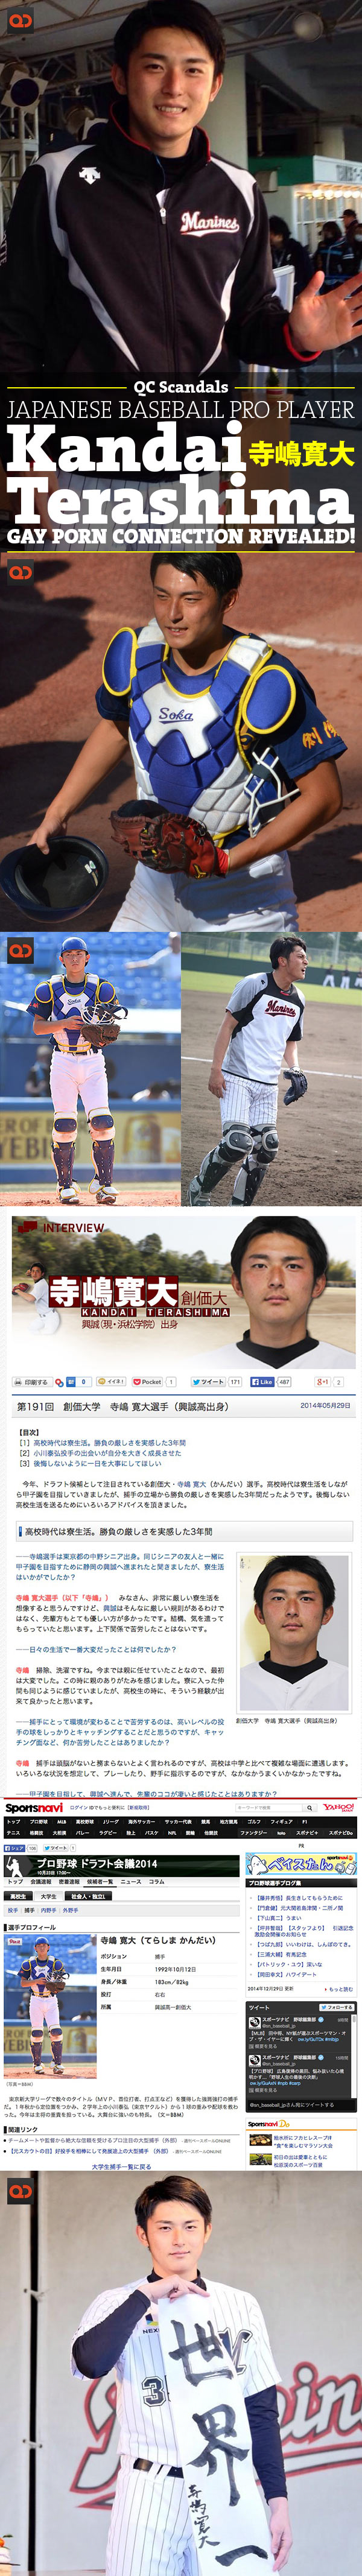 QC Scandals: Japanese Baseball Pro Player Kandai Terashima 寺嶋寛大 Gay Porn Connection Revealed!